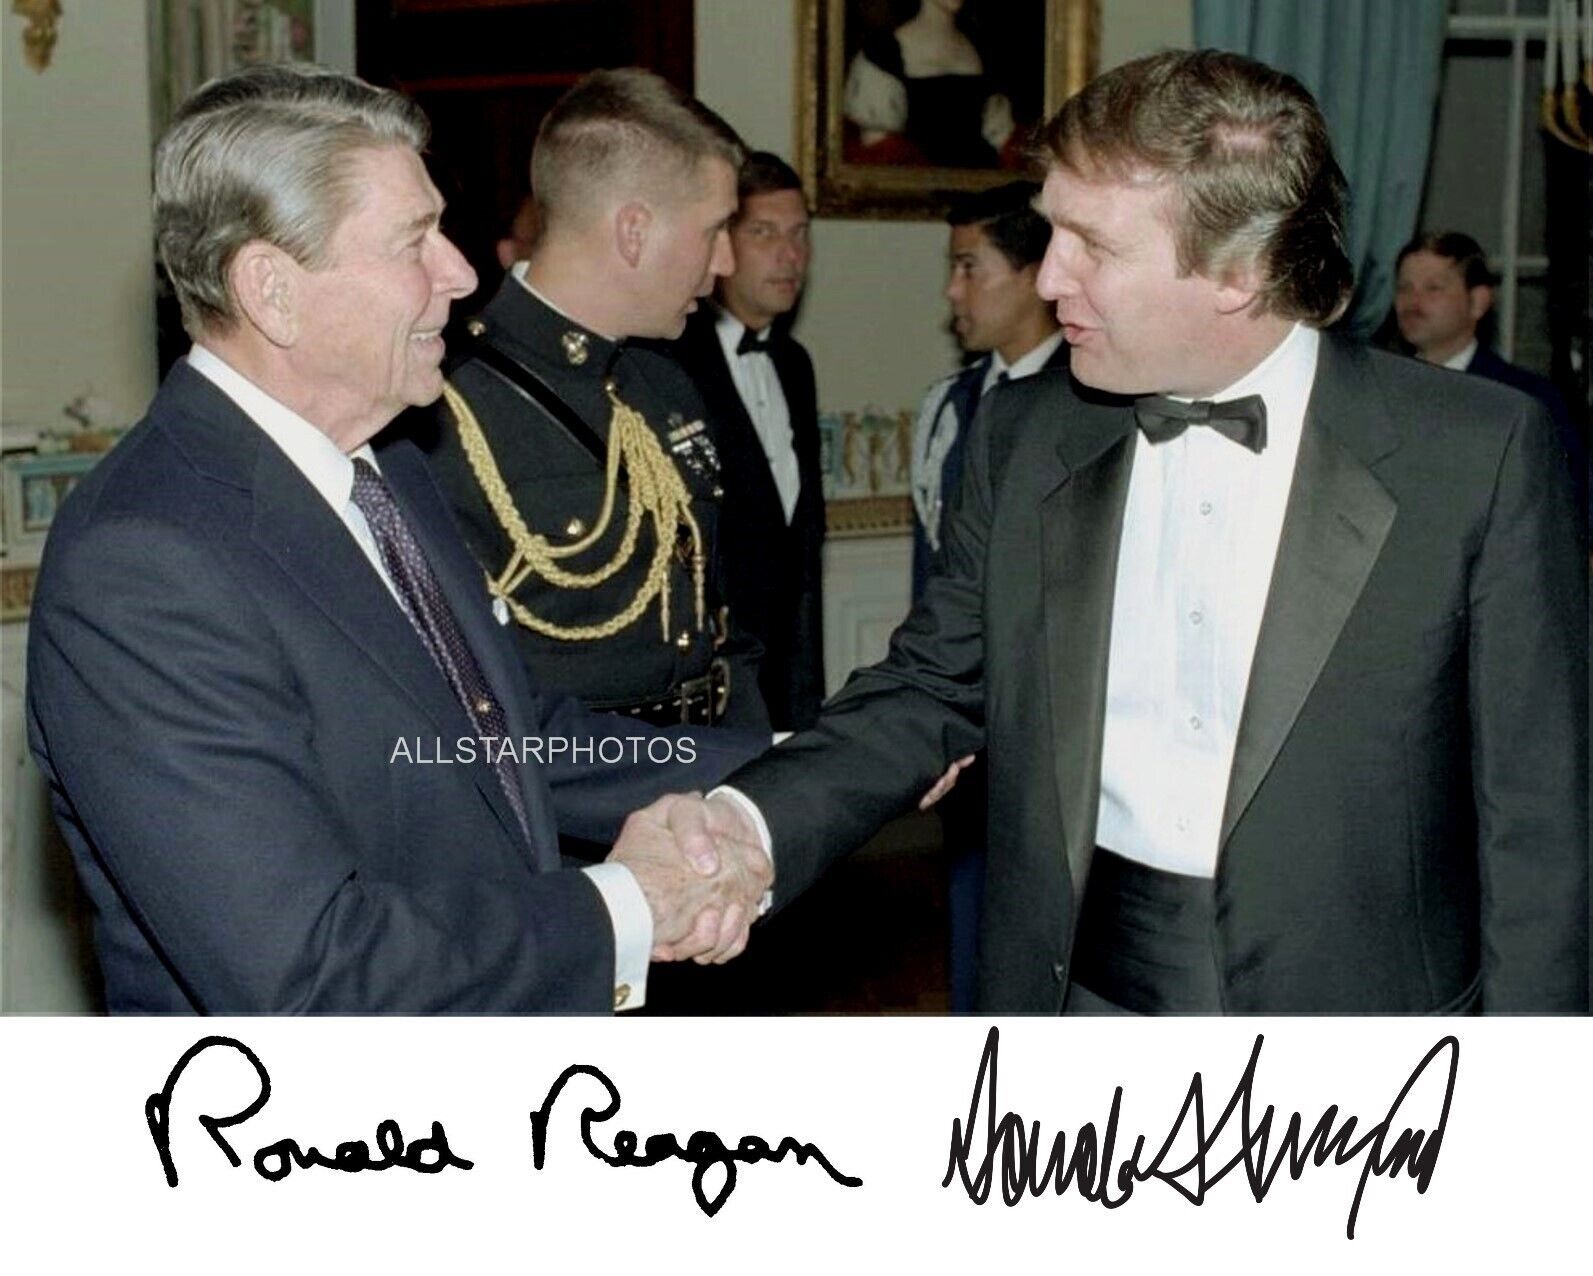 President Donald Trump Ronald Reagan Meet Shaking Hands 8 x 10 Photo Photograph